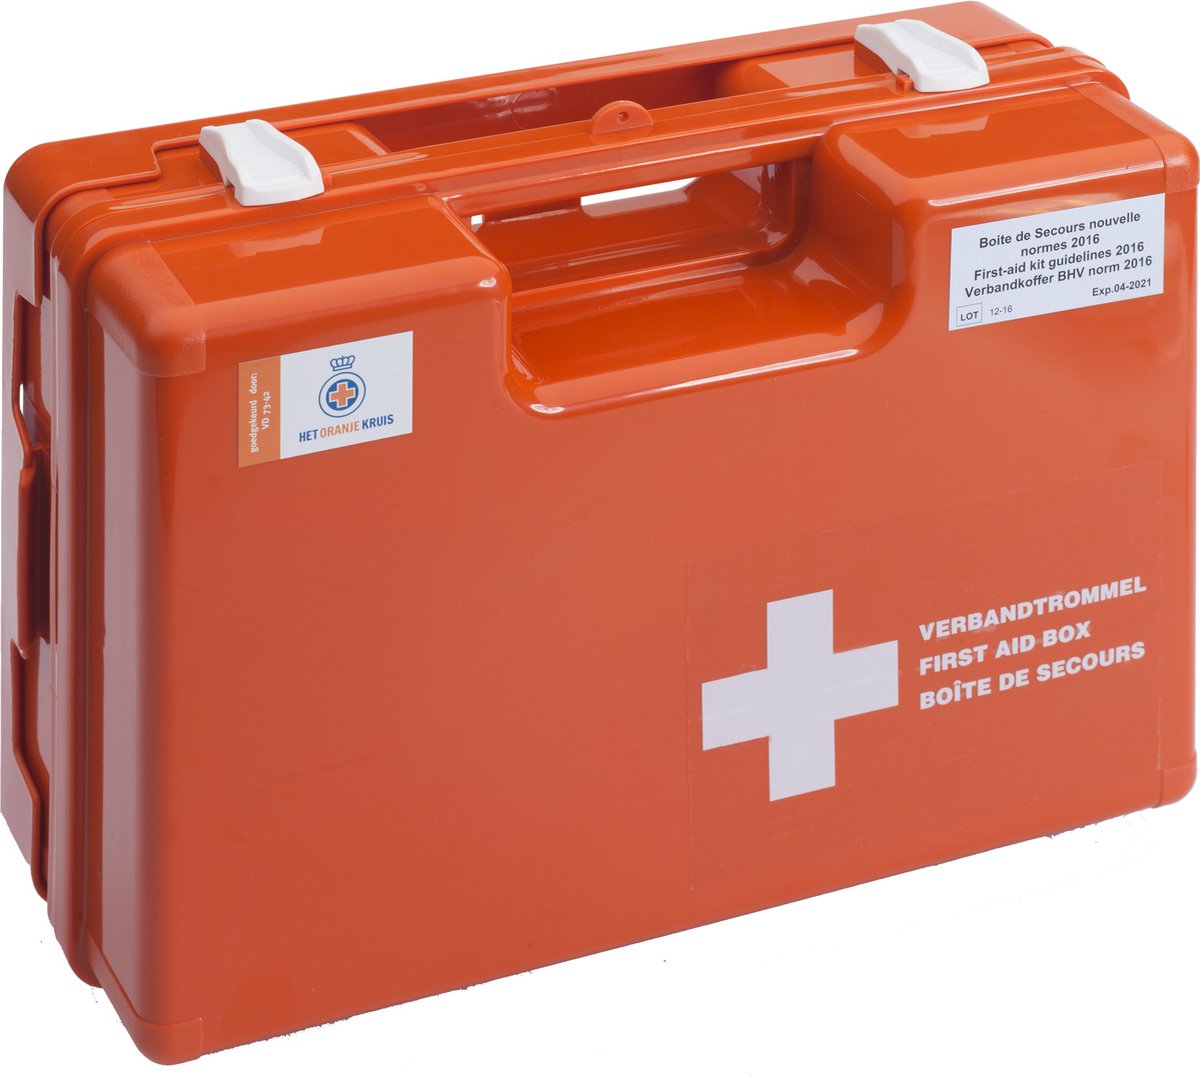 Verbanddoos BHV - EHBO koffer - 2 stuks - (Oranje Kruis goedgekeurd) - Incl. wandbeugel